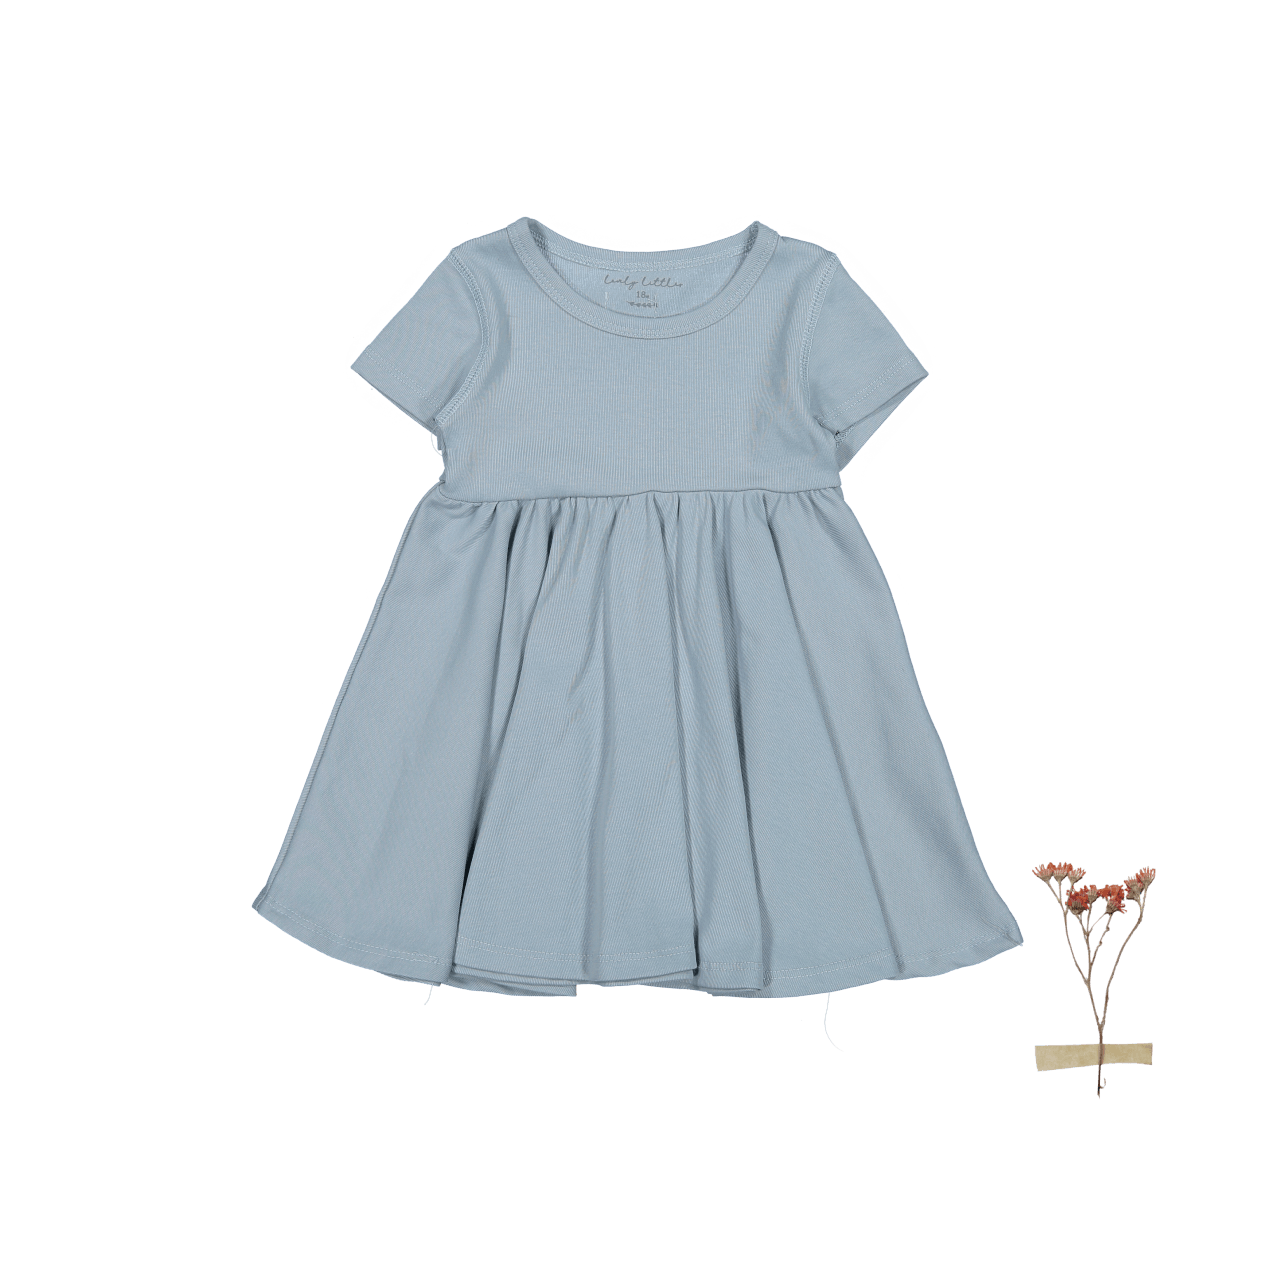 The Short Sleeve Dress - Ocean